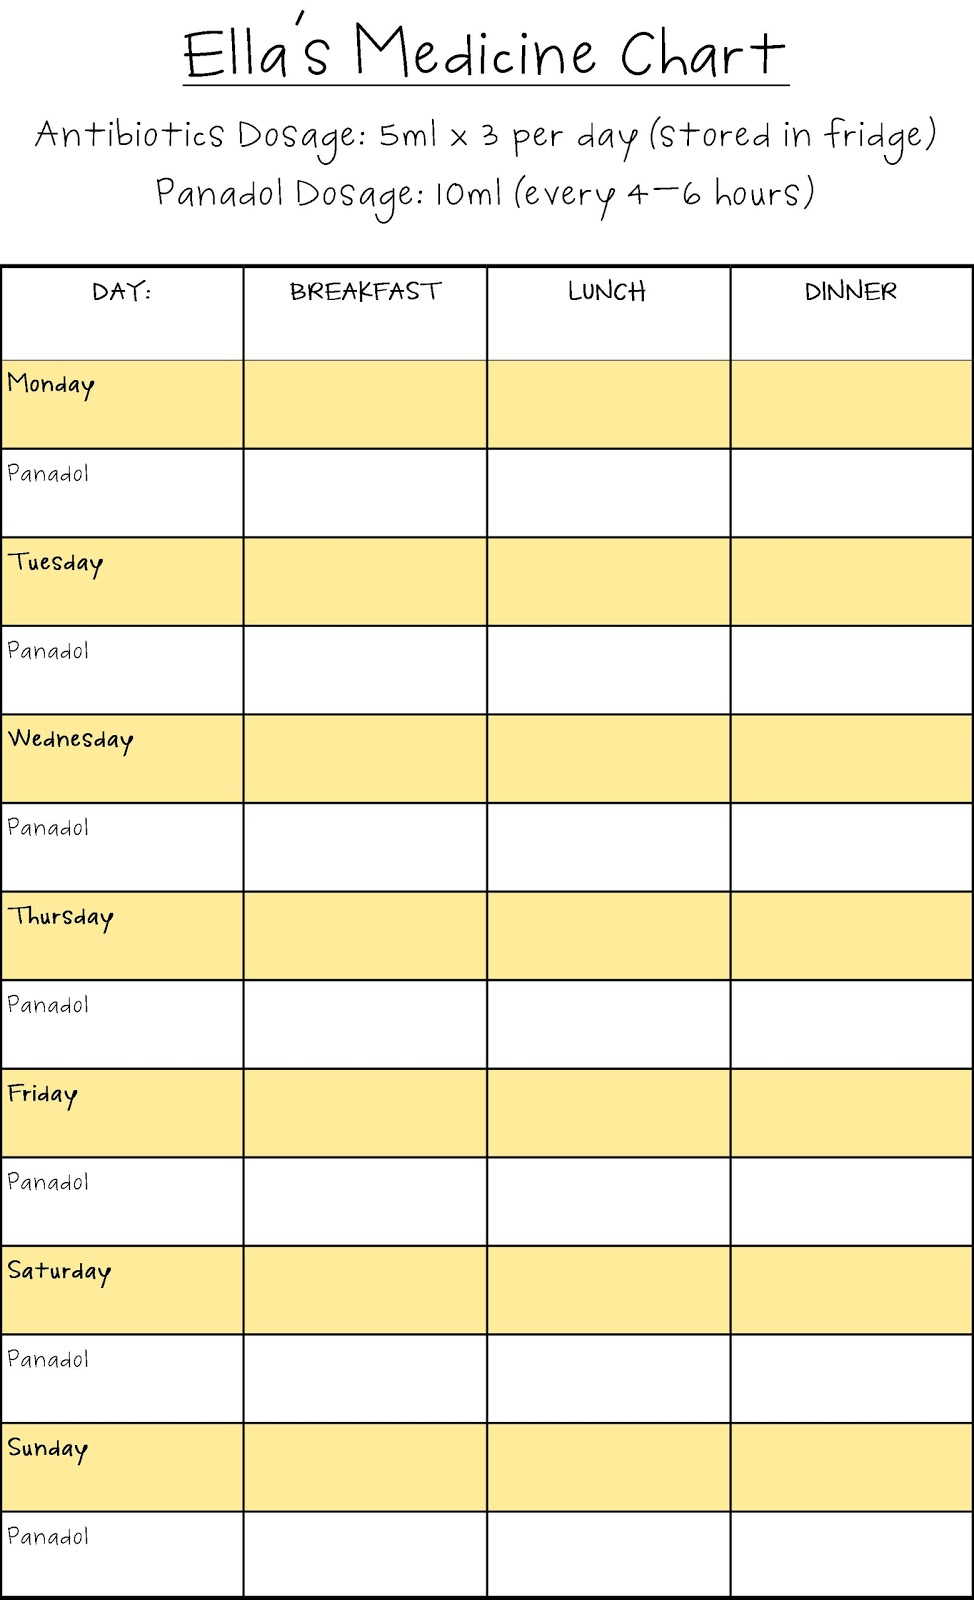 Printable Medication Schedule Image Result For Medicine Chart - Free Printable Daily Medication Schedule